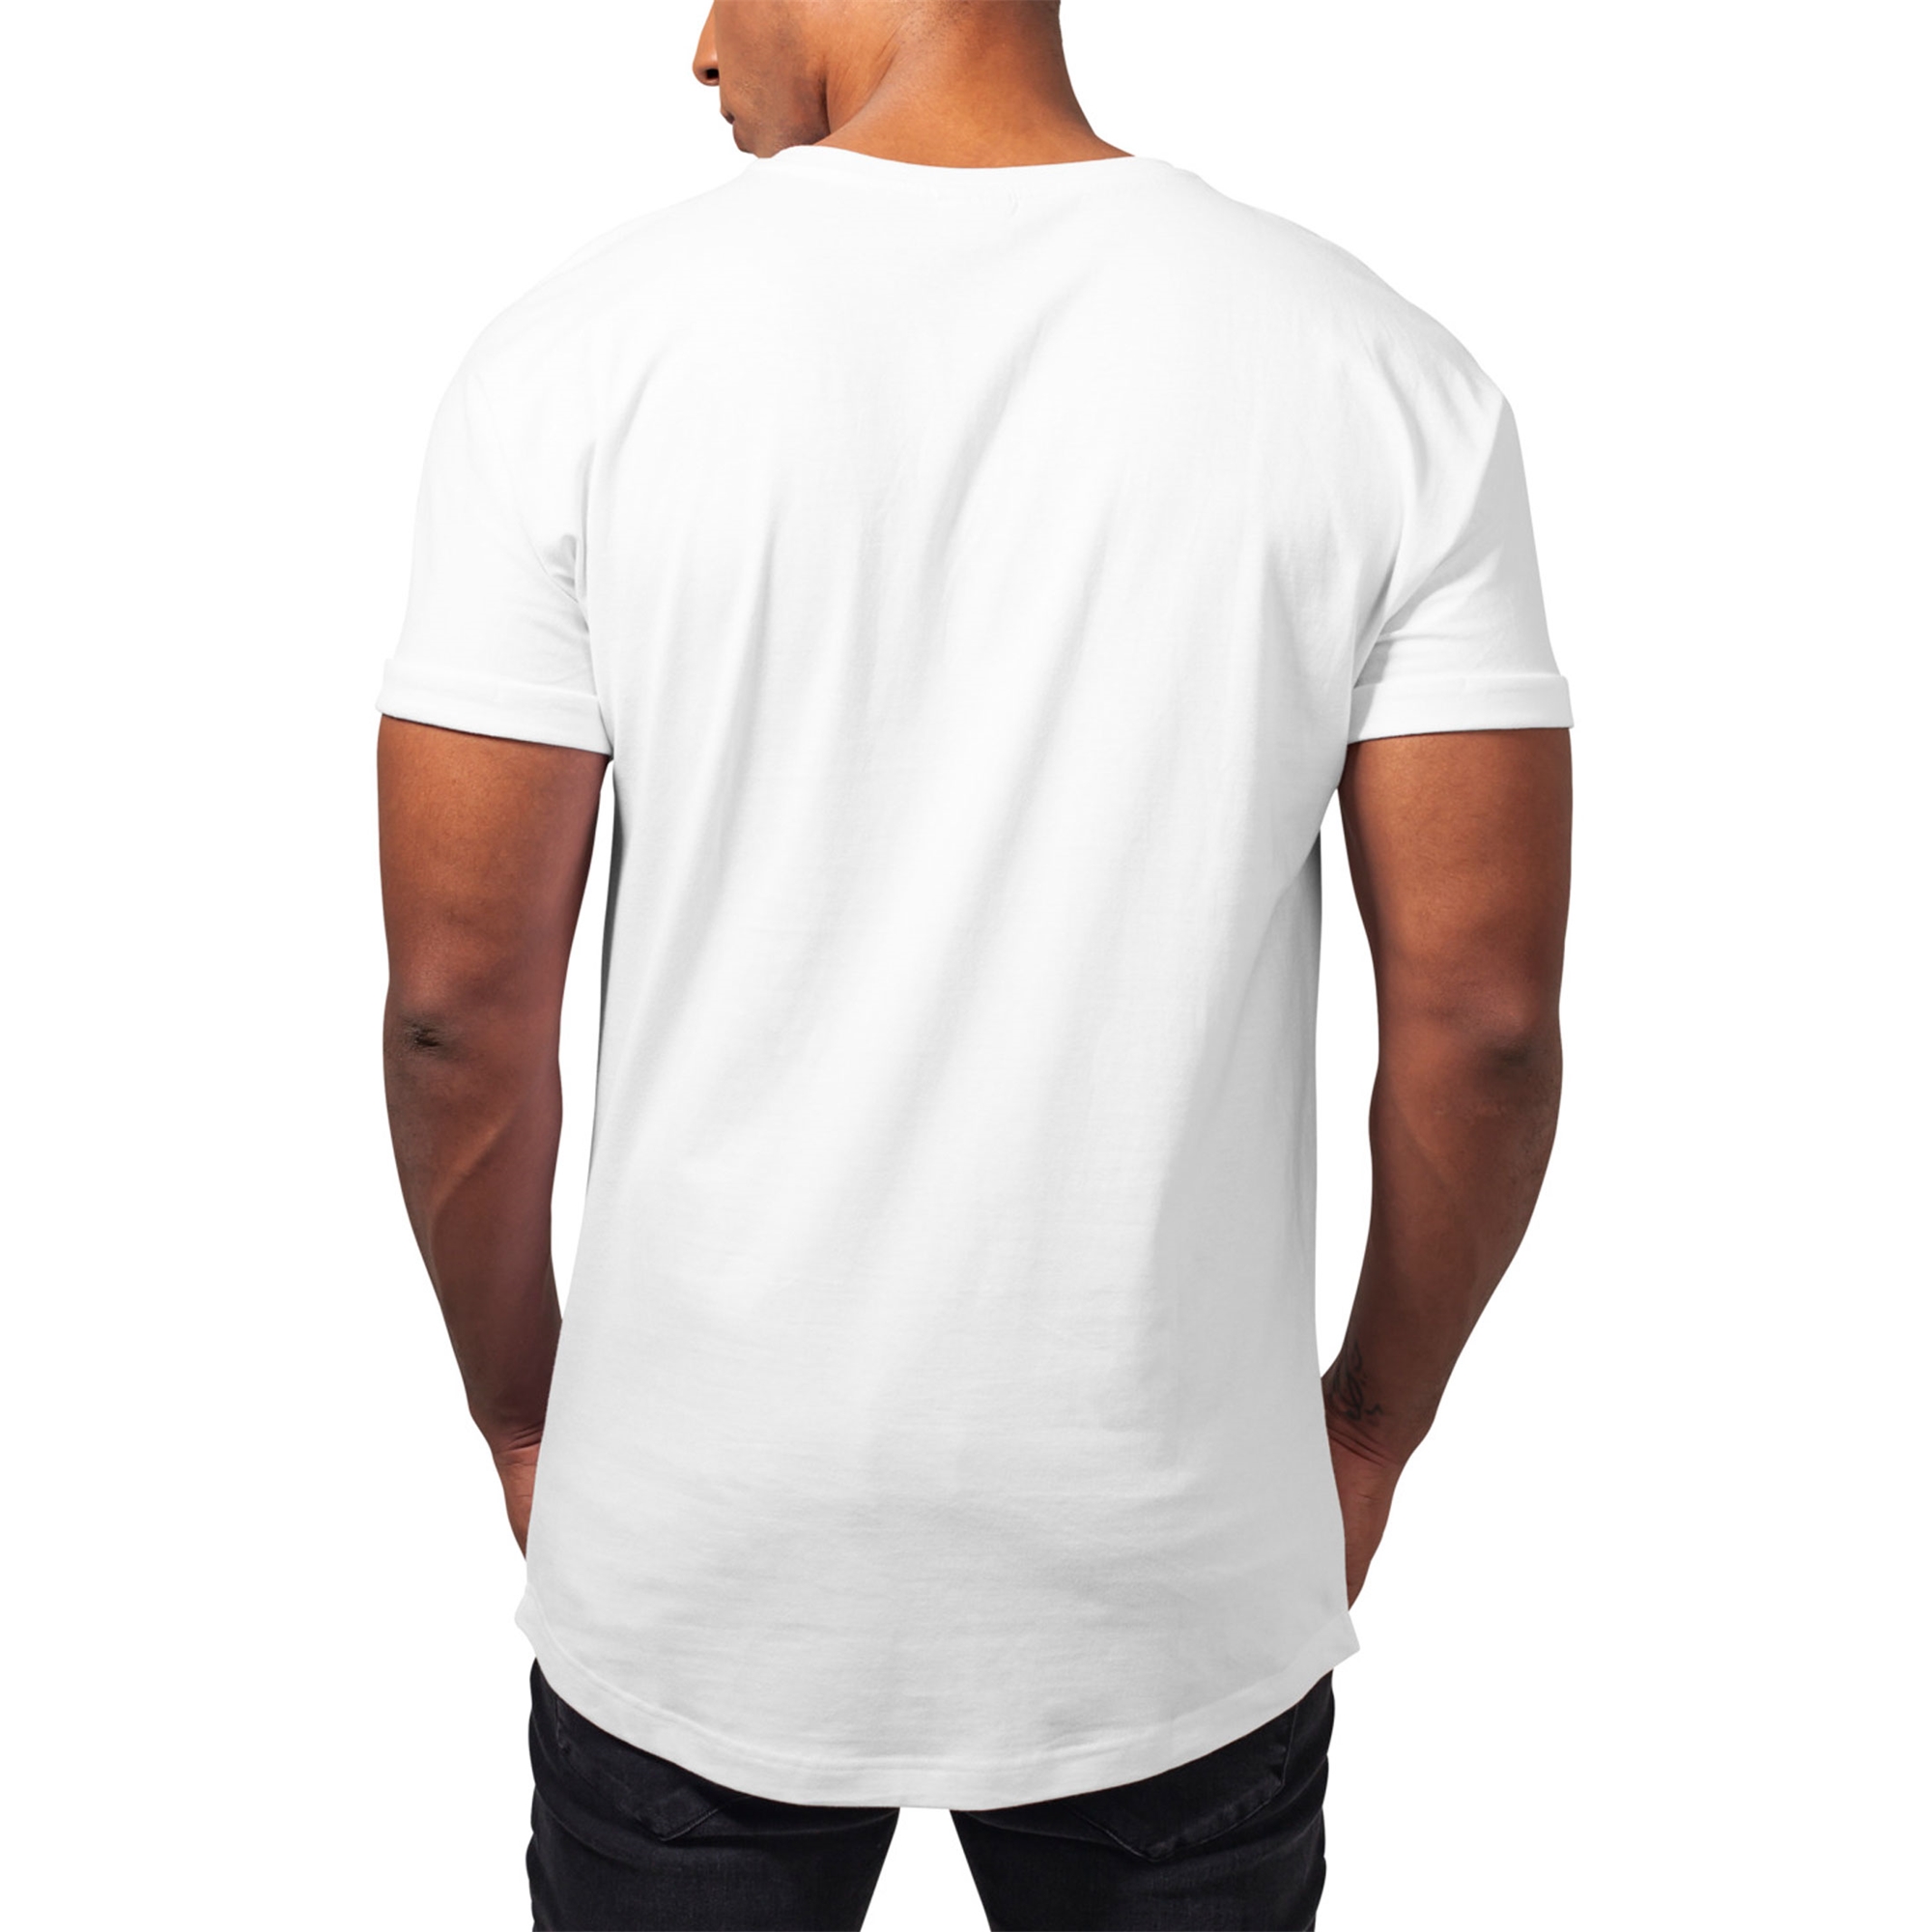 Urban Classics Herren Tee T-Shirt Shaped extra Long | eBay oversize lang Shirt Turnup